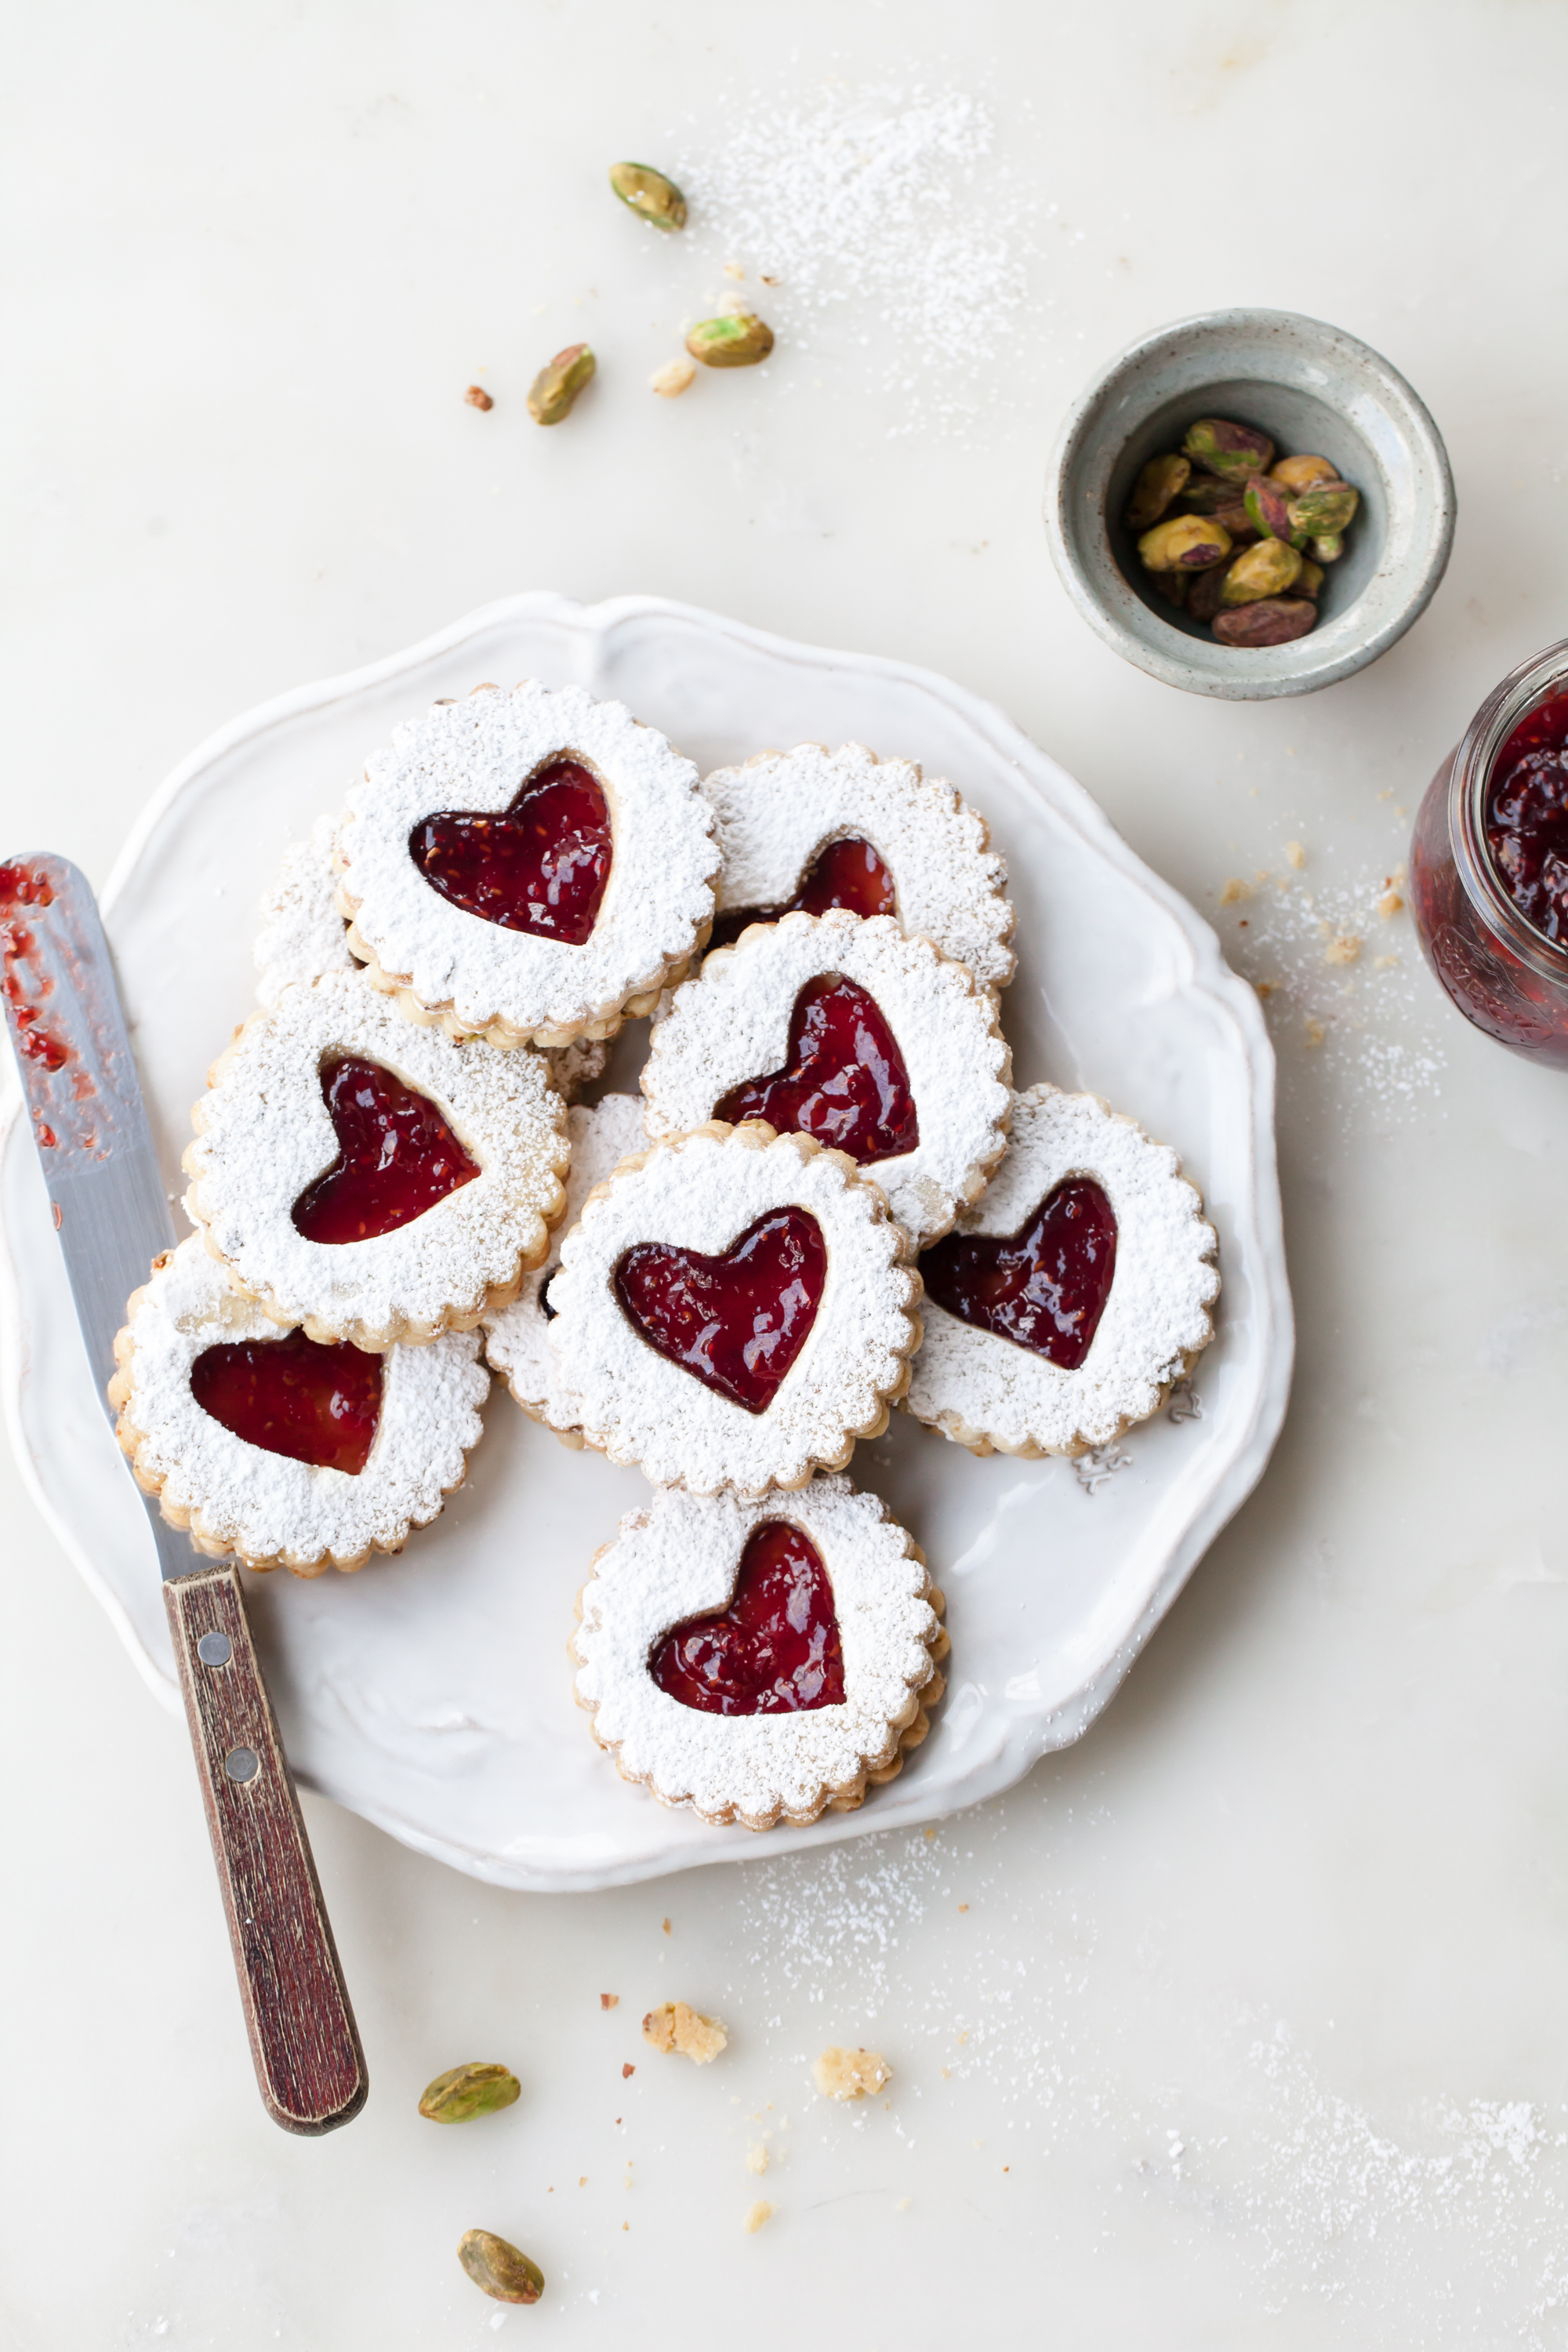 Pistachio Linzer Cookies with raspberry jam filling